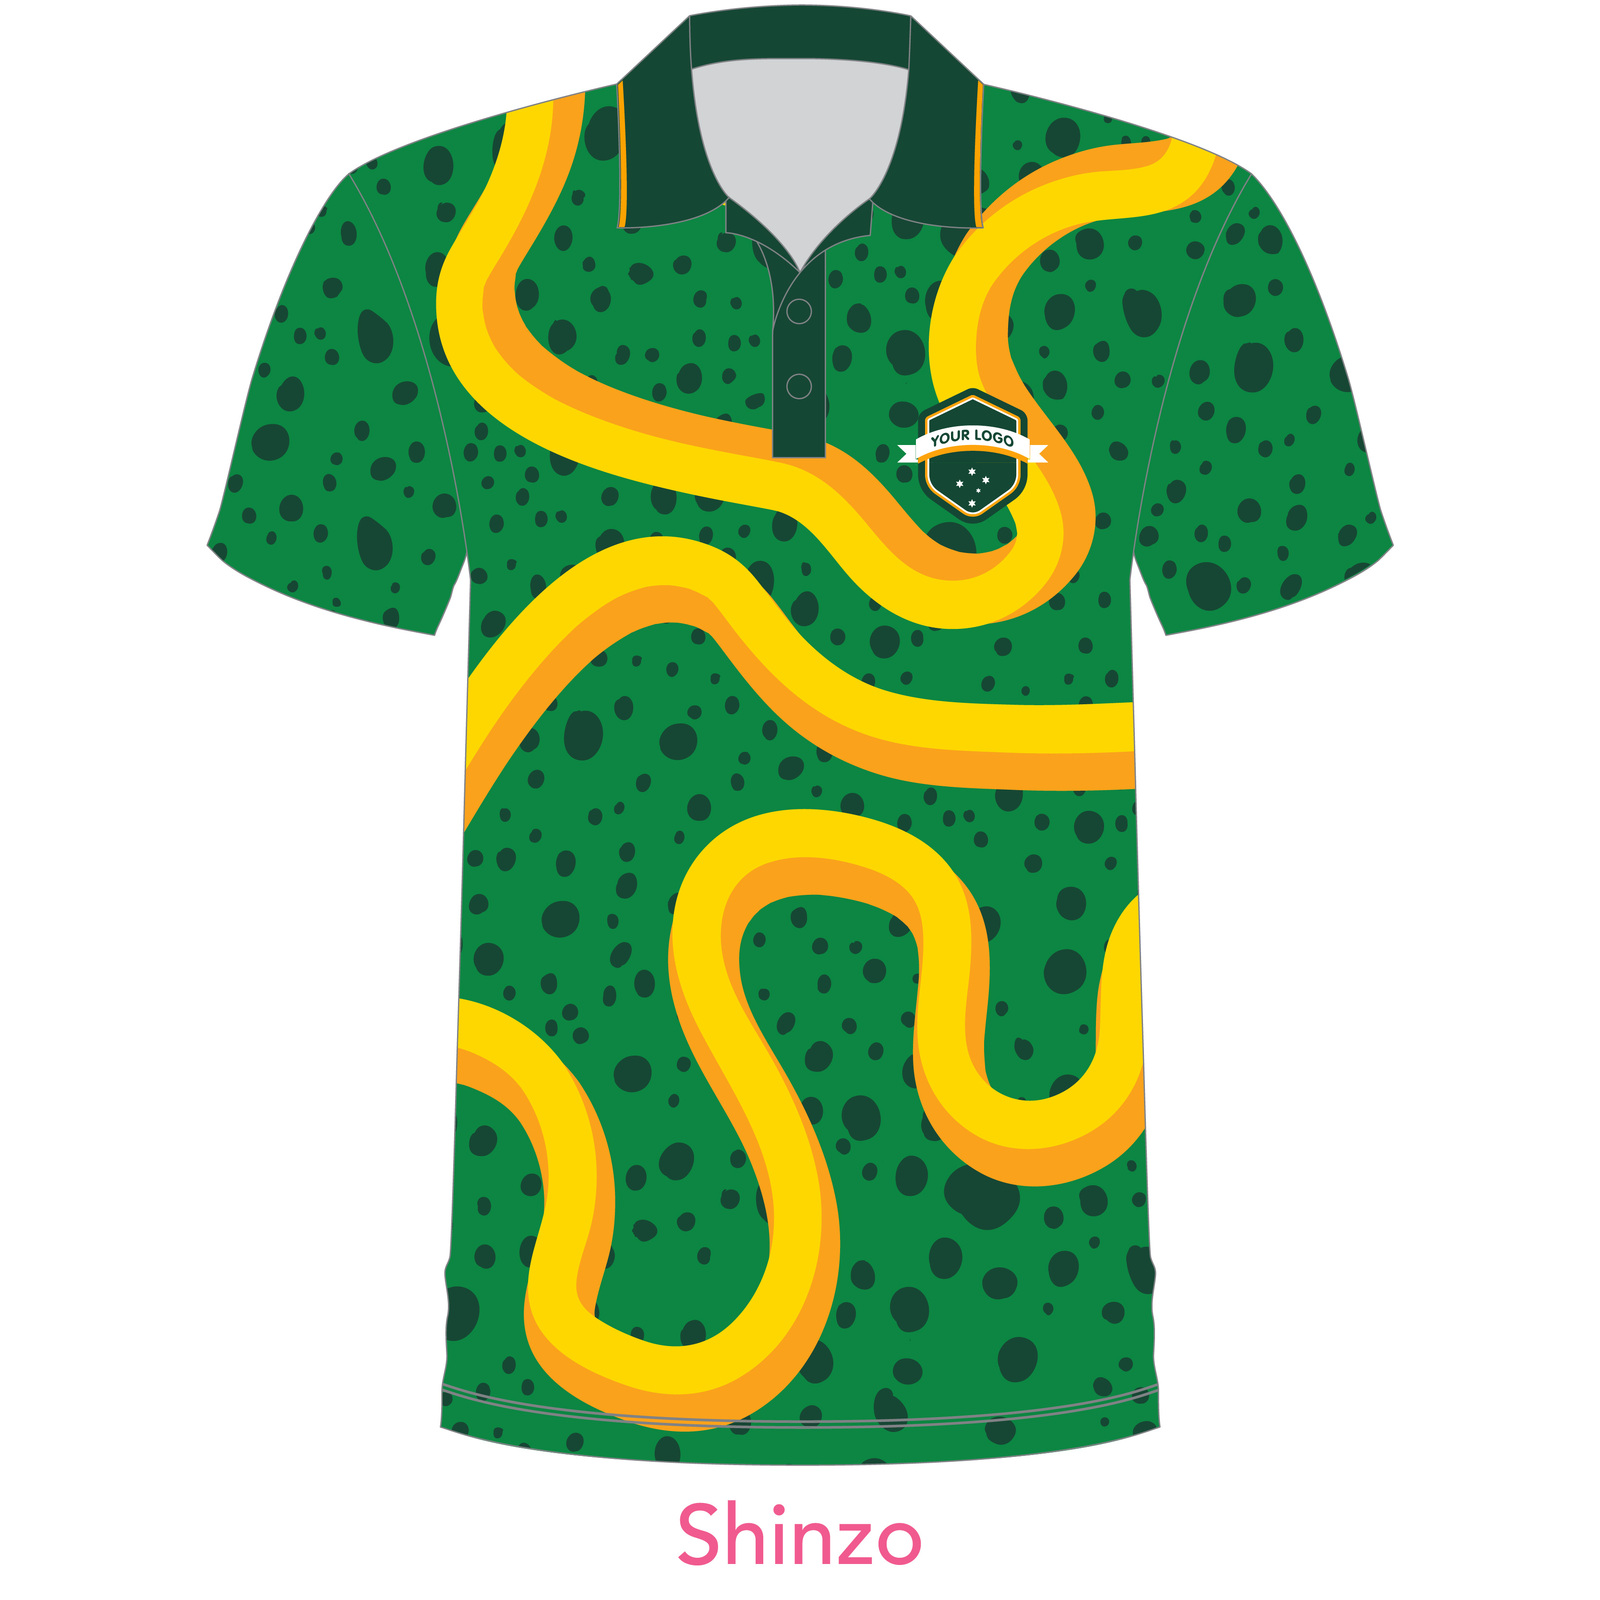 Customised Shirt - Shinzo